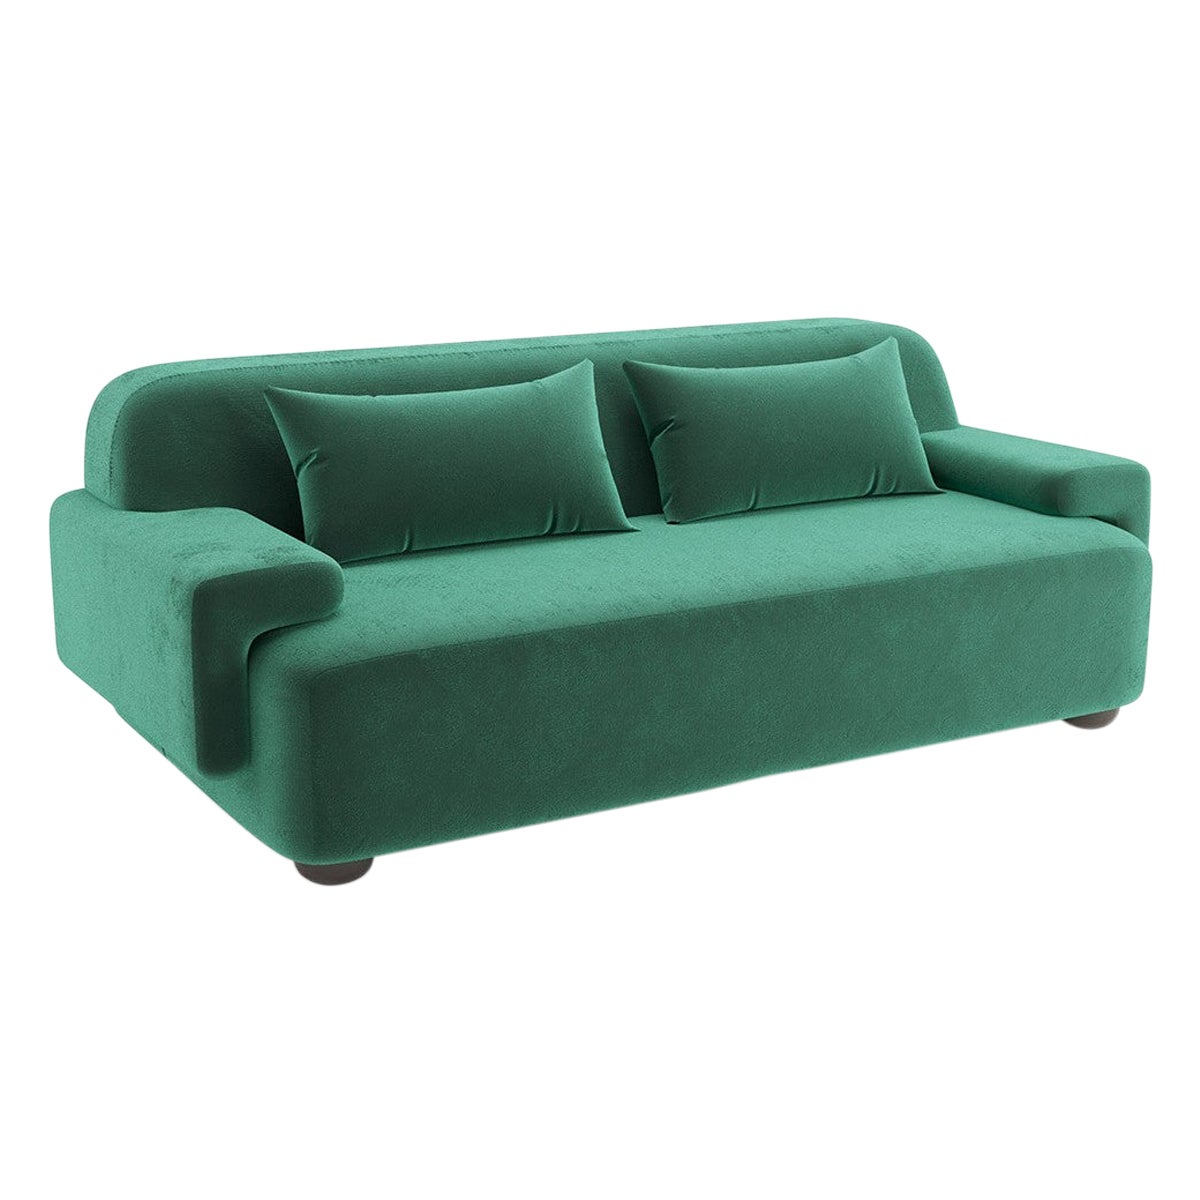 Popus Editions Lena 2.5 Seater Sofa in Green '772256' Como Velvet Upholstery